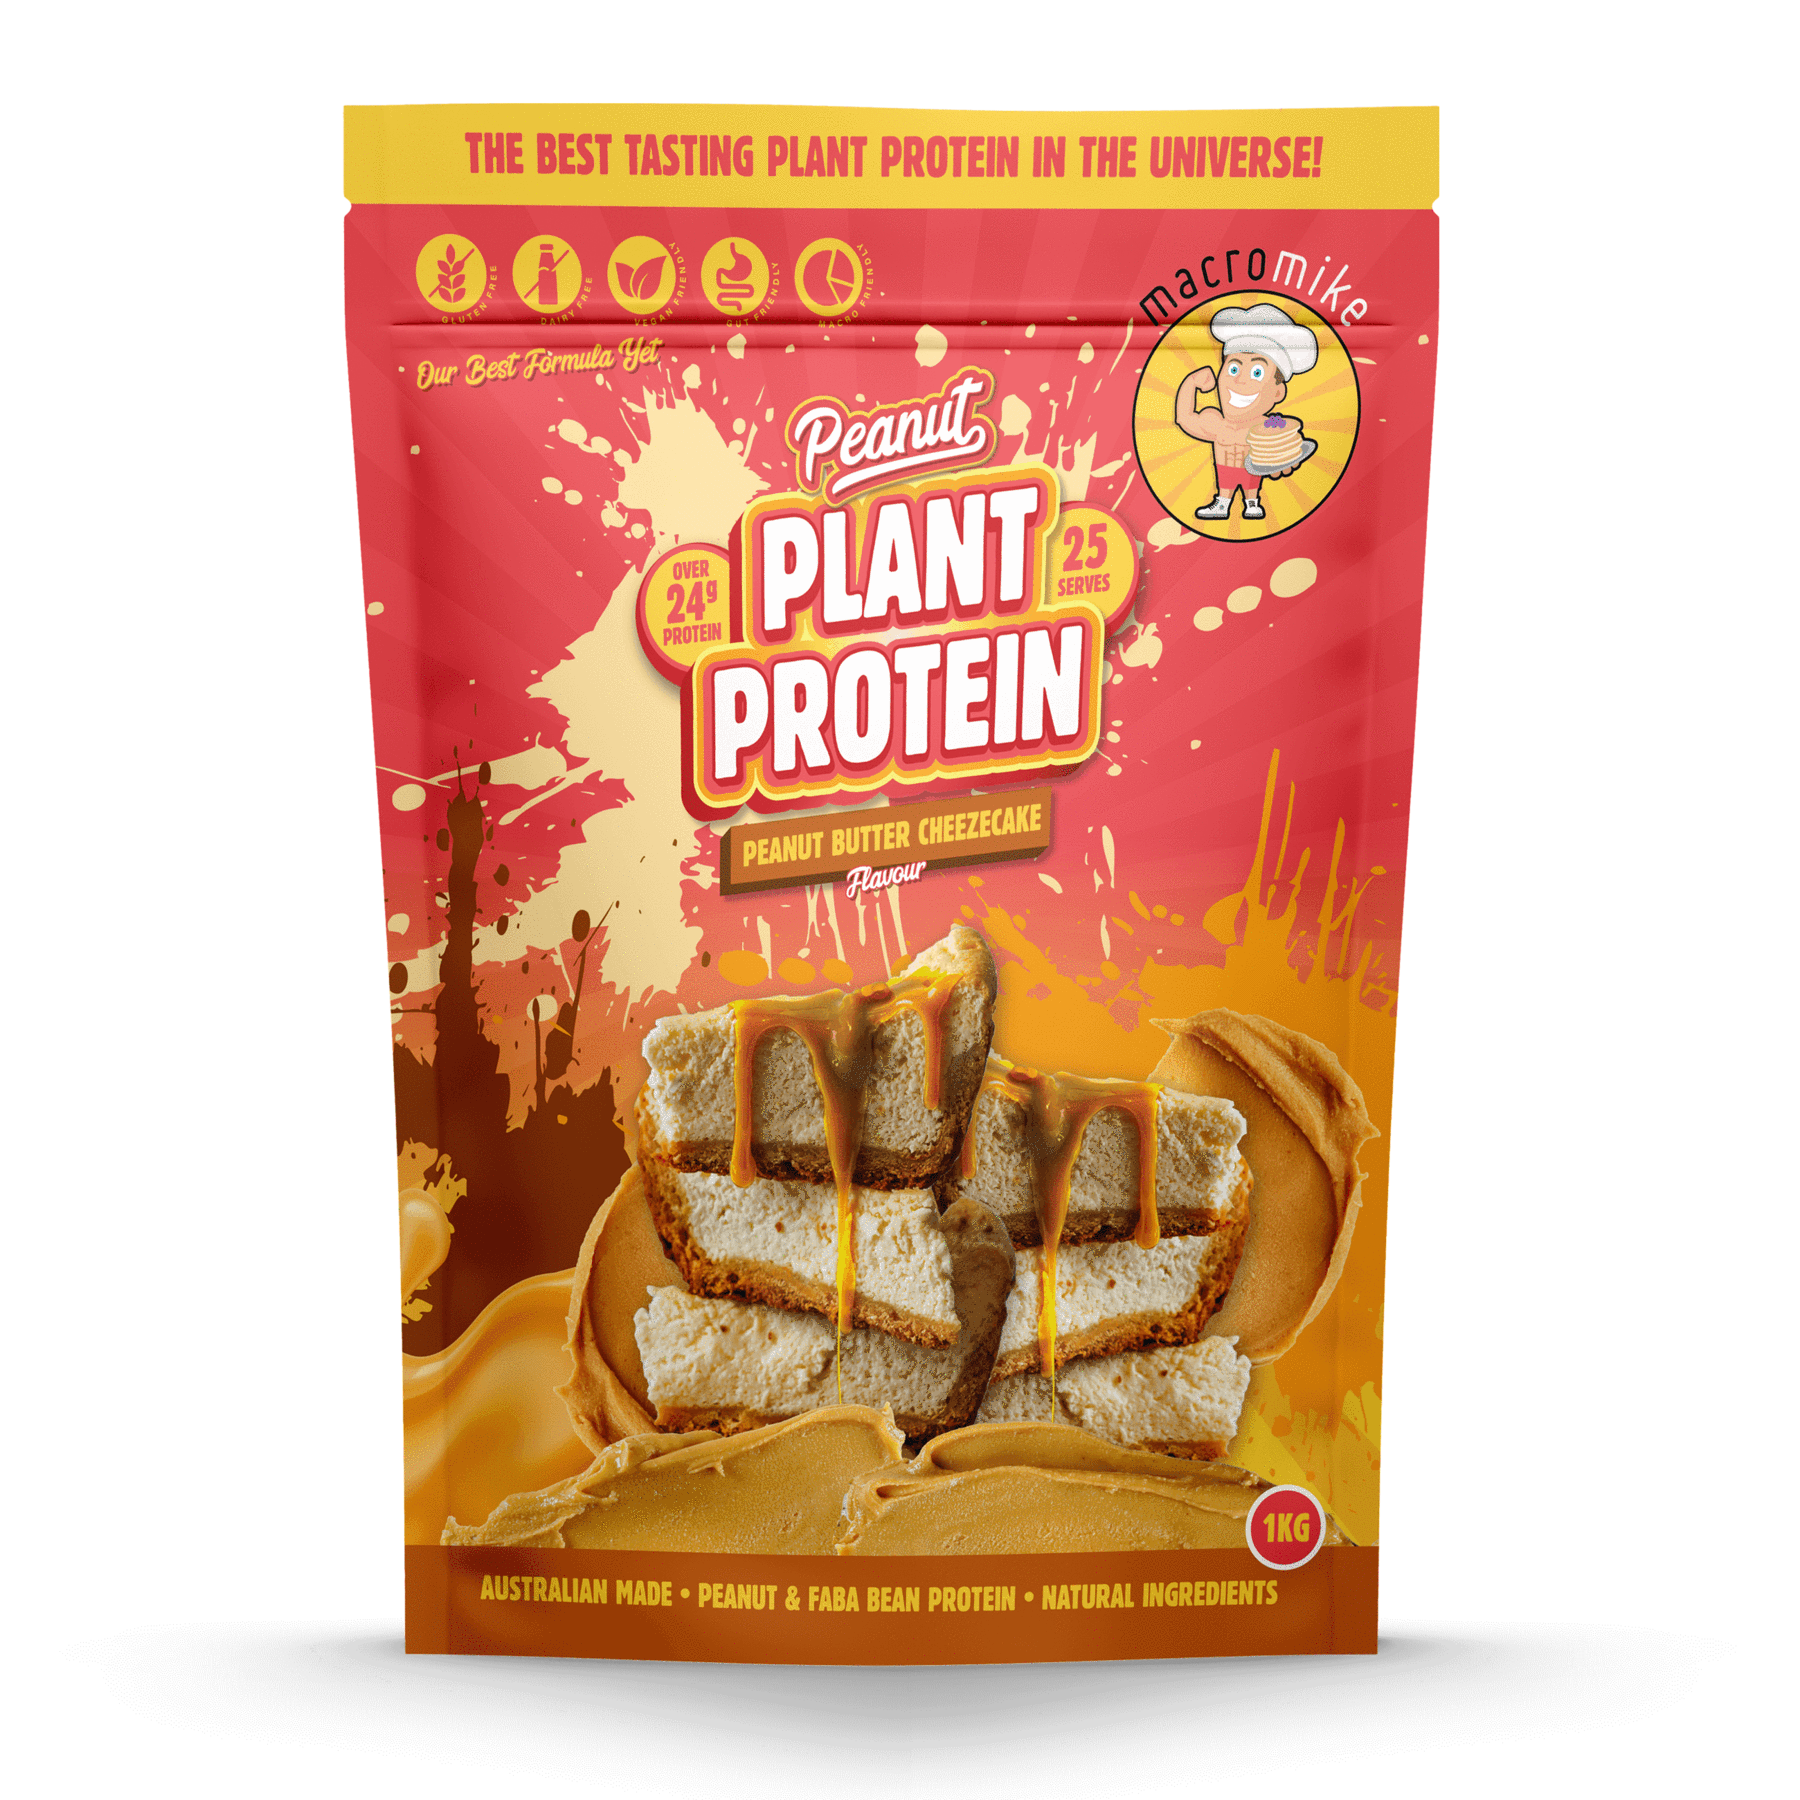 Plant Based Protein Powder // Peanut Protein